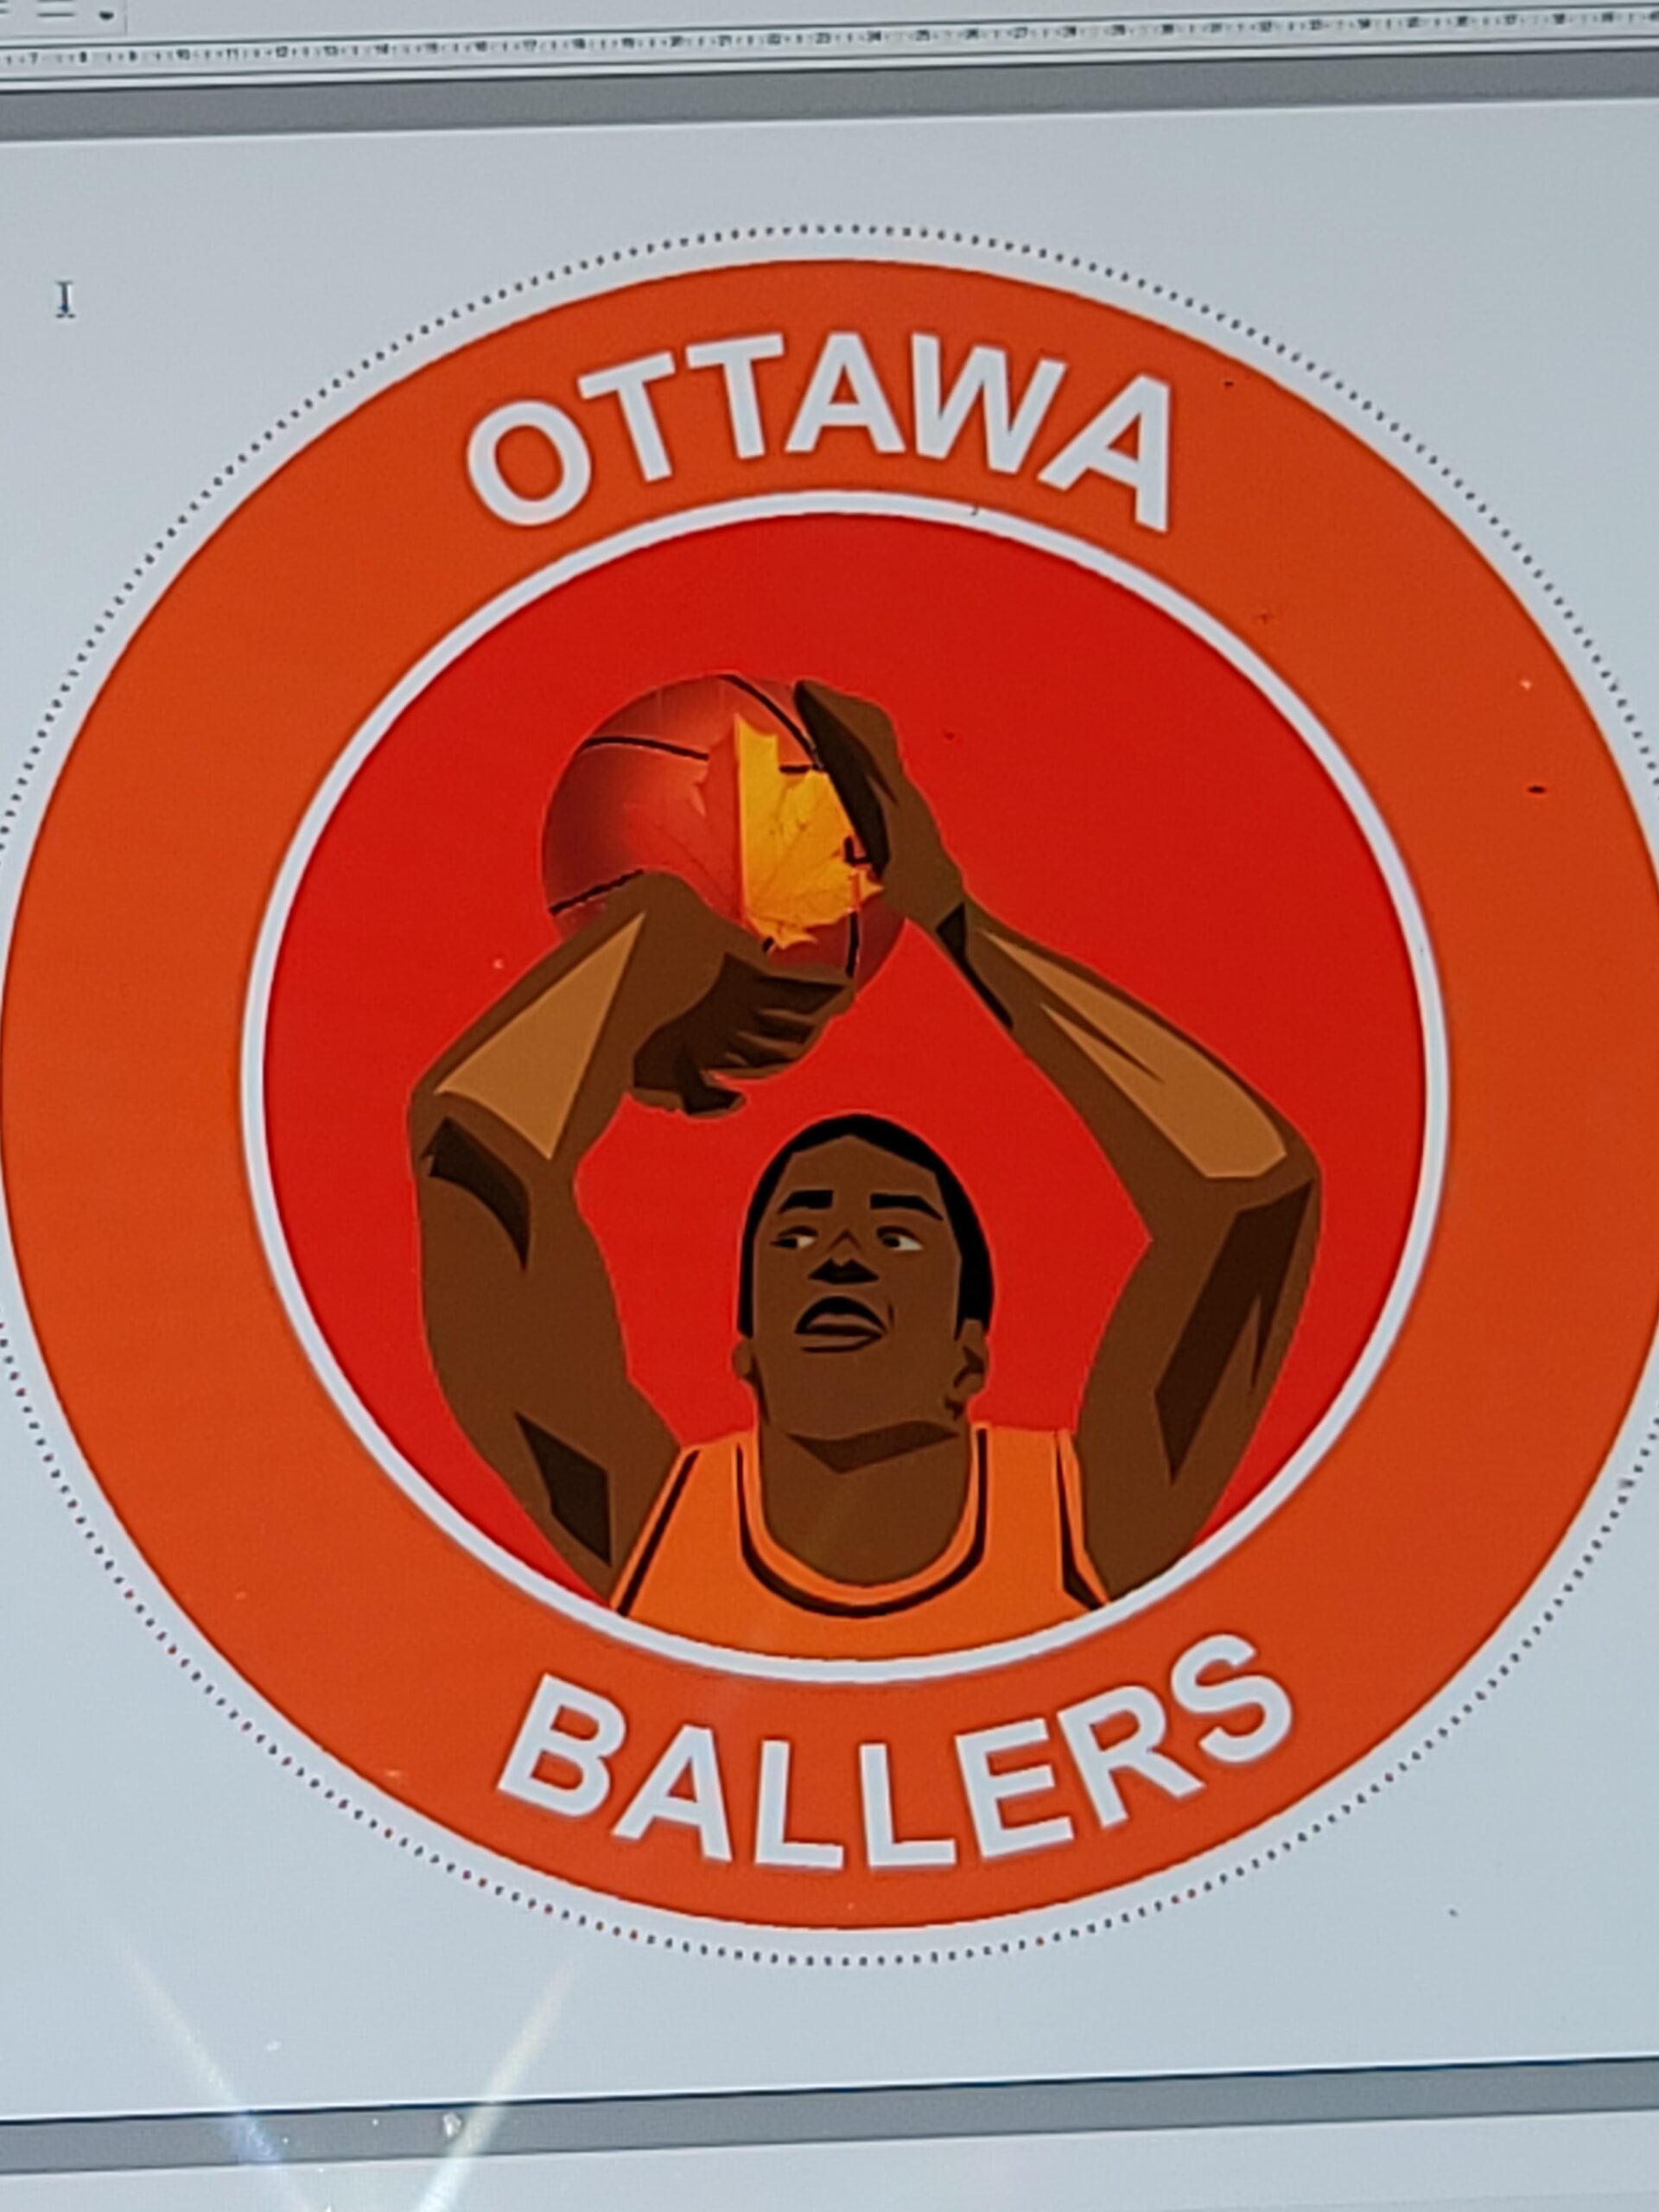 Ottawa-Ballers